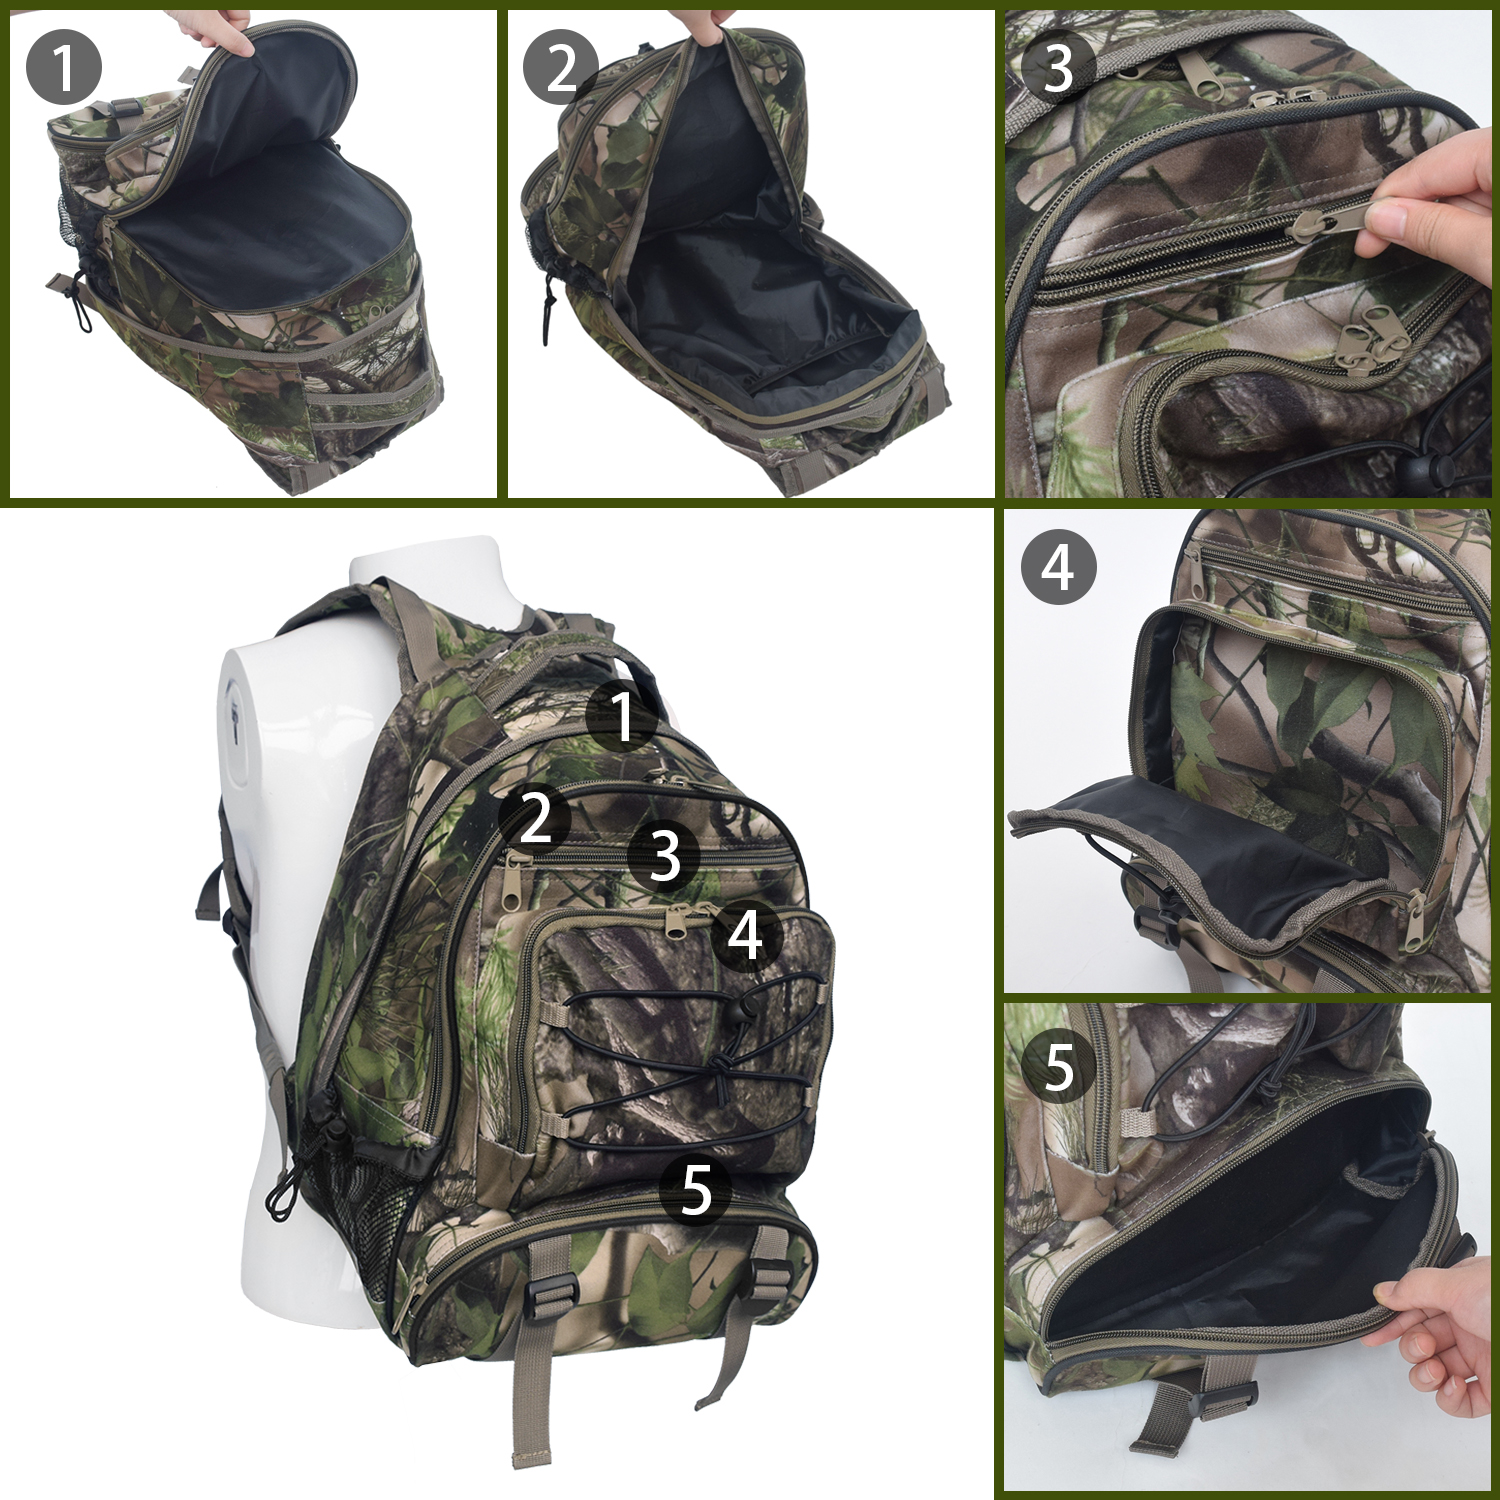 MDSHB-2 hunting bags6